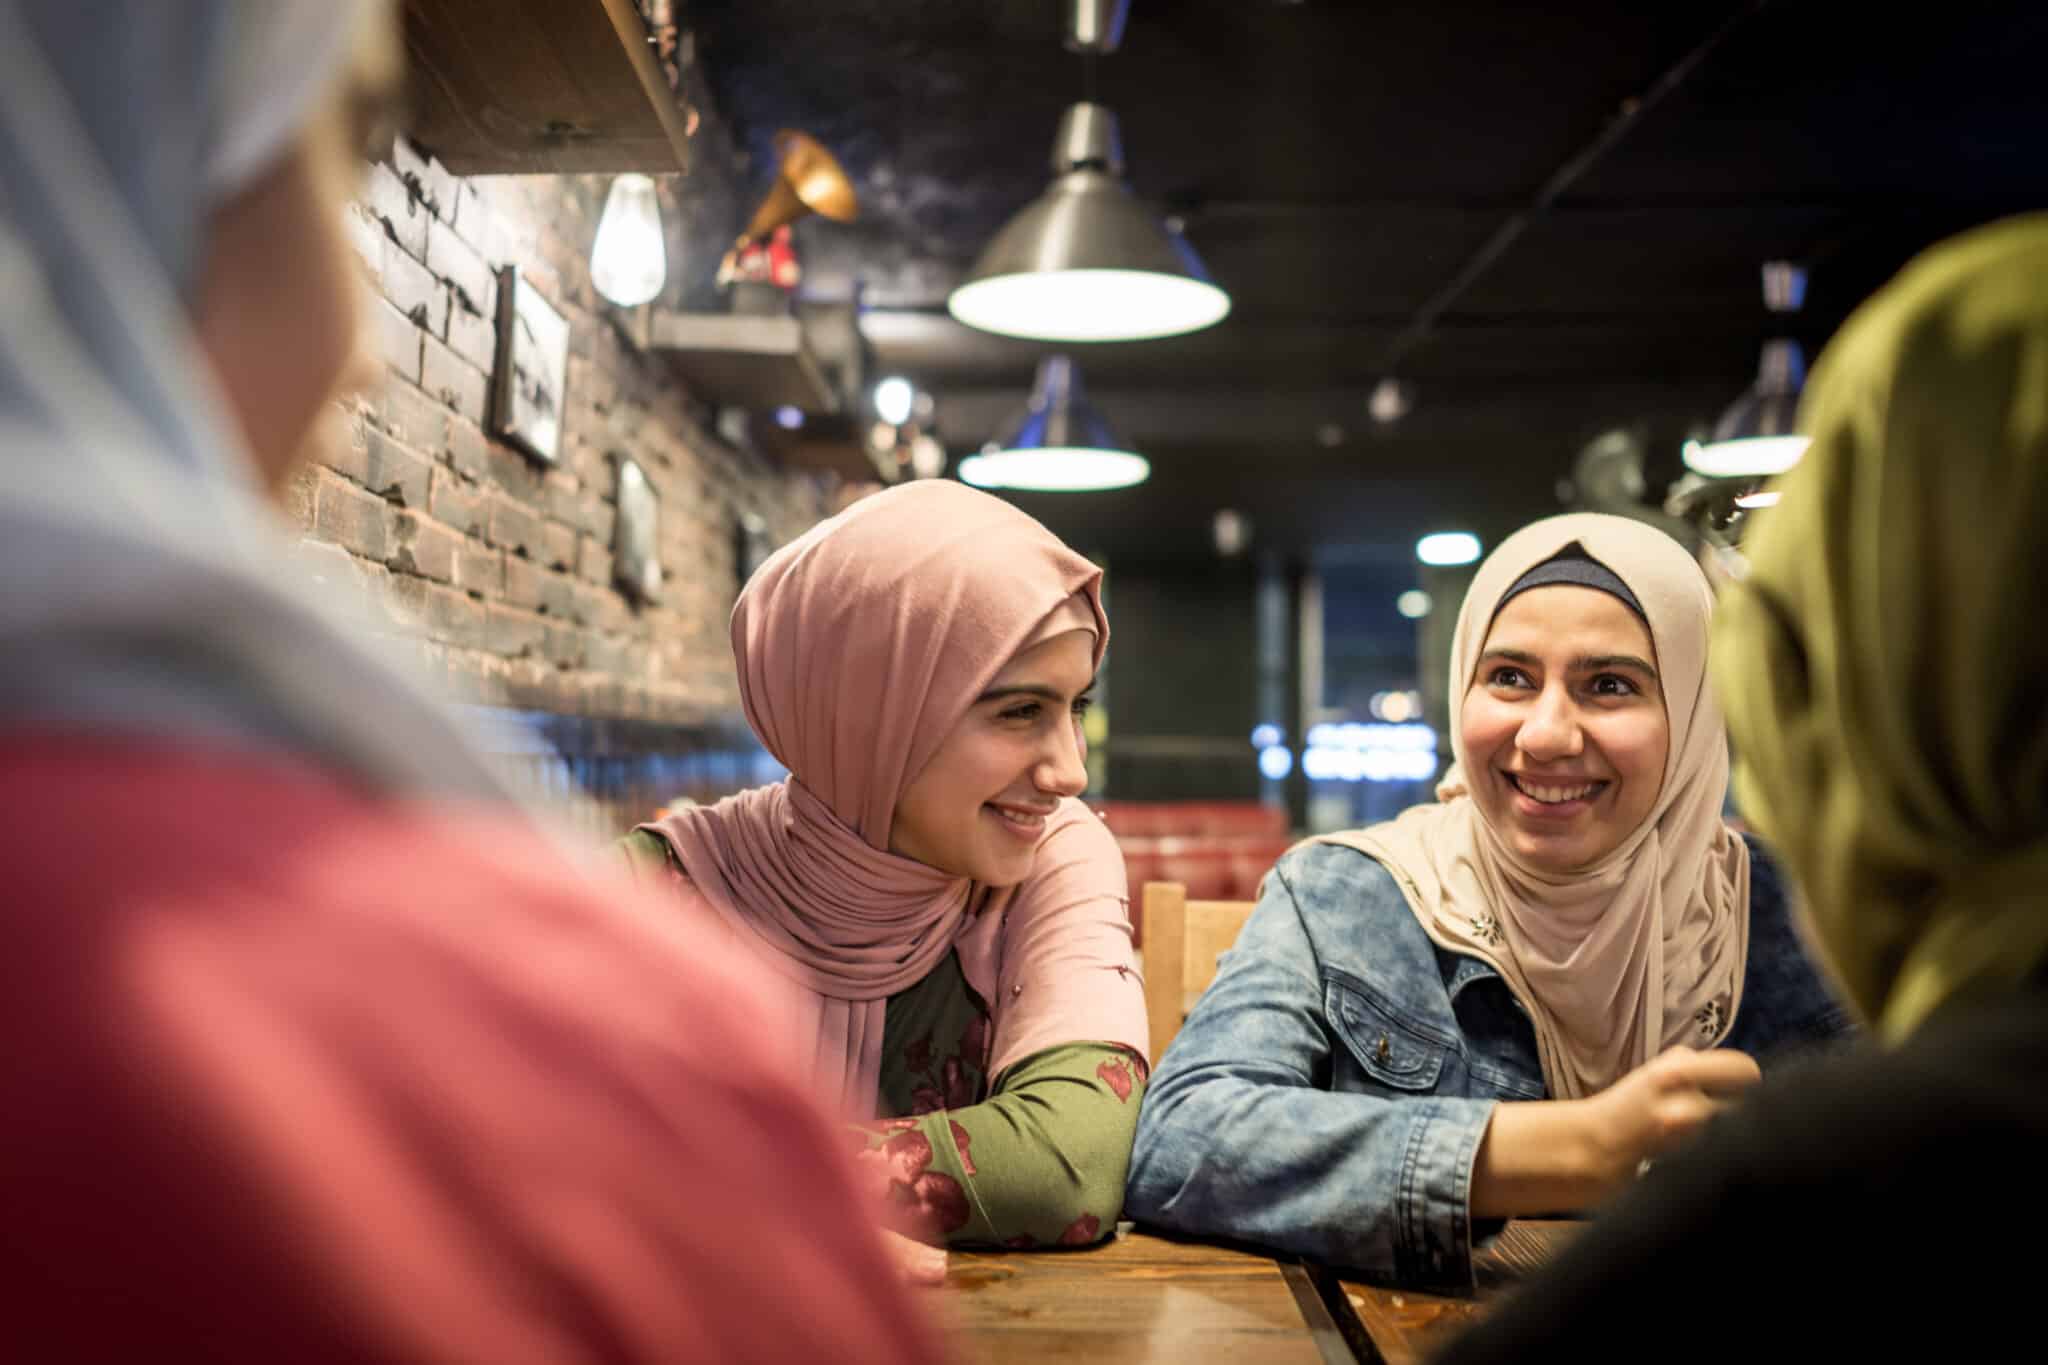 Muslim Arab teenage girls celebrating together perhaps during Eid